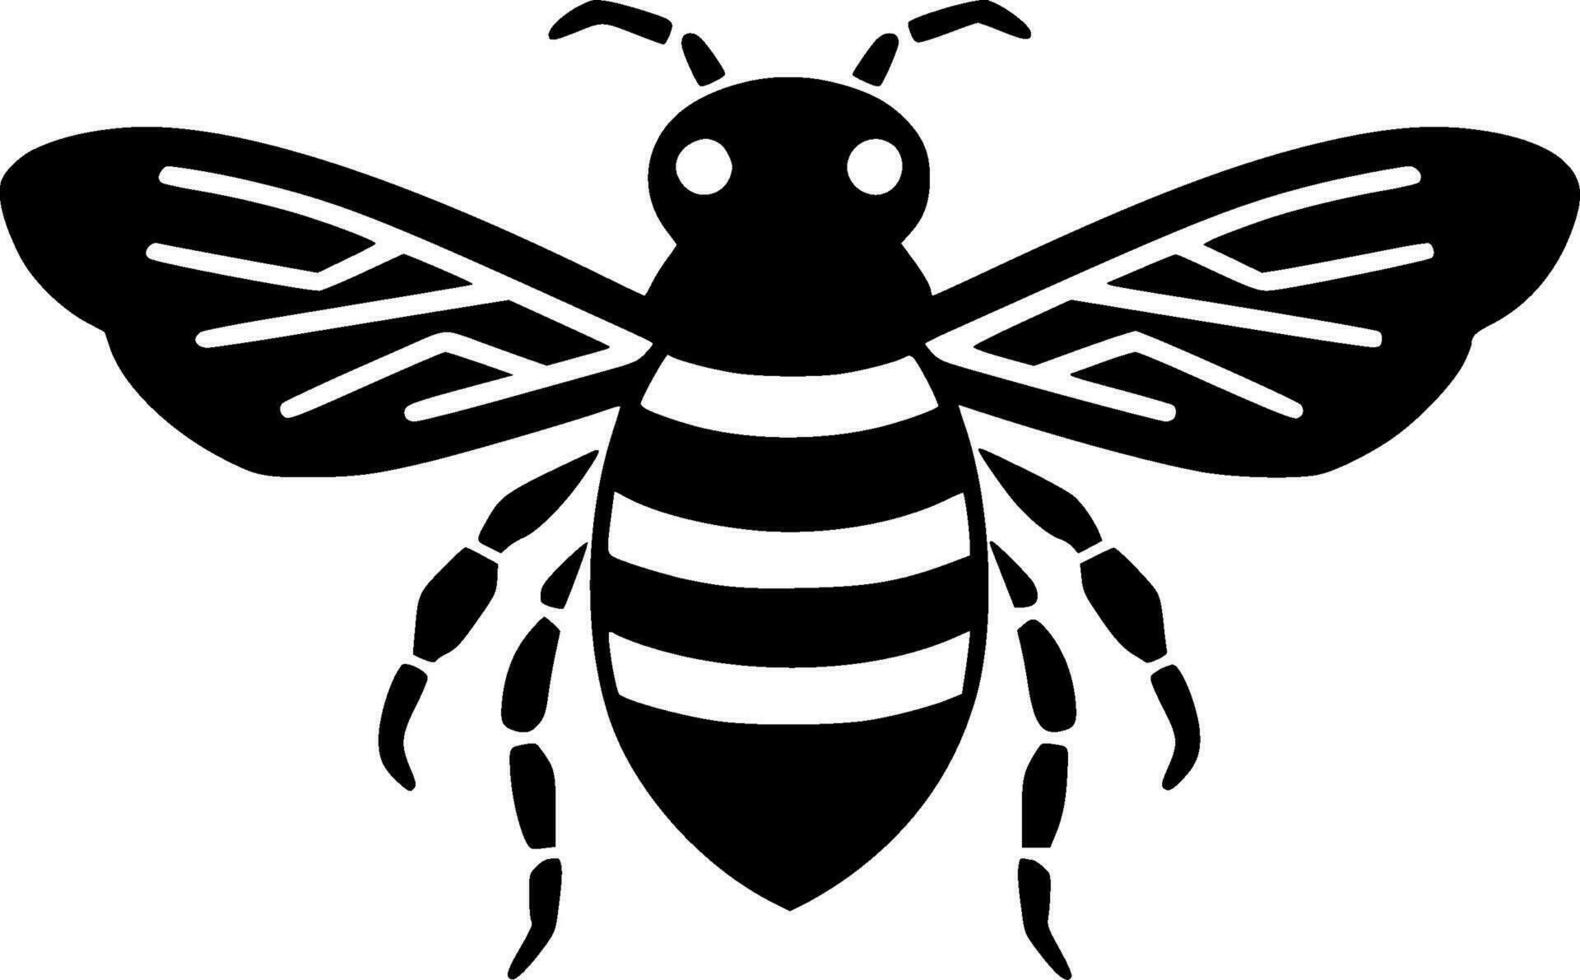 Bee, Minimalist and Simple Silhouette - Vector illustration